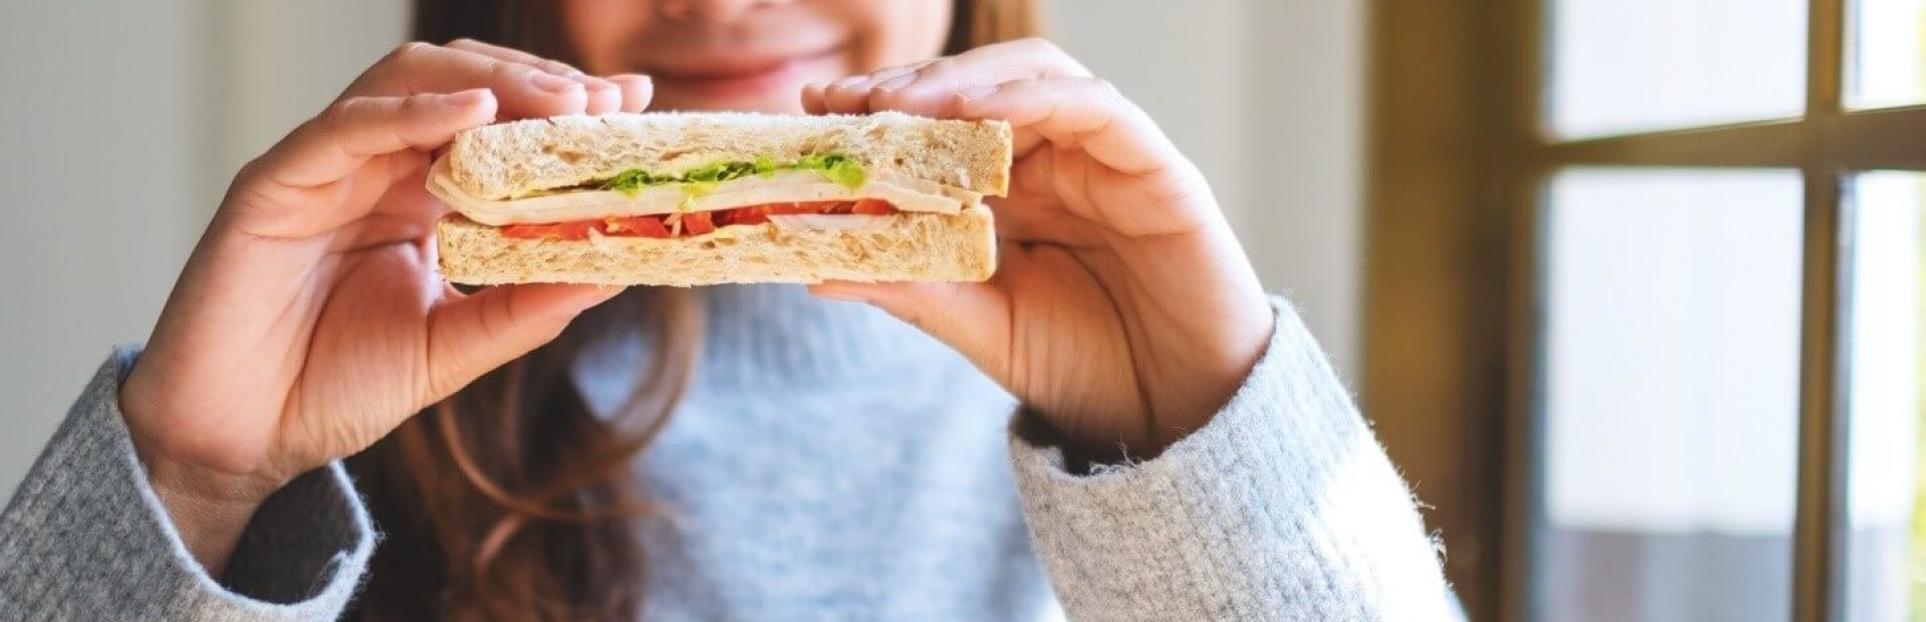 girl holding sandwich